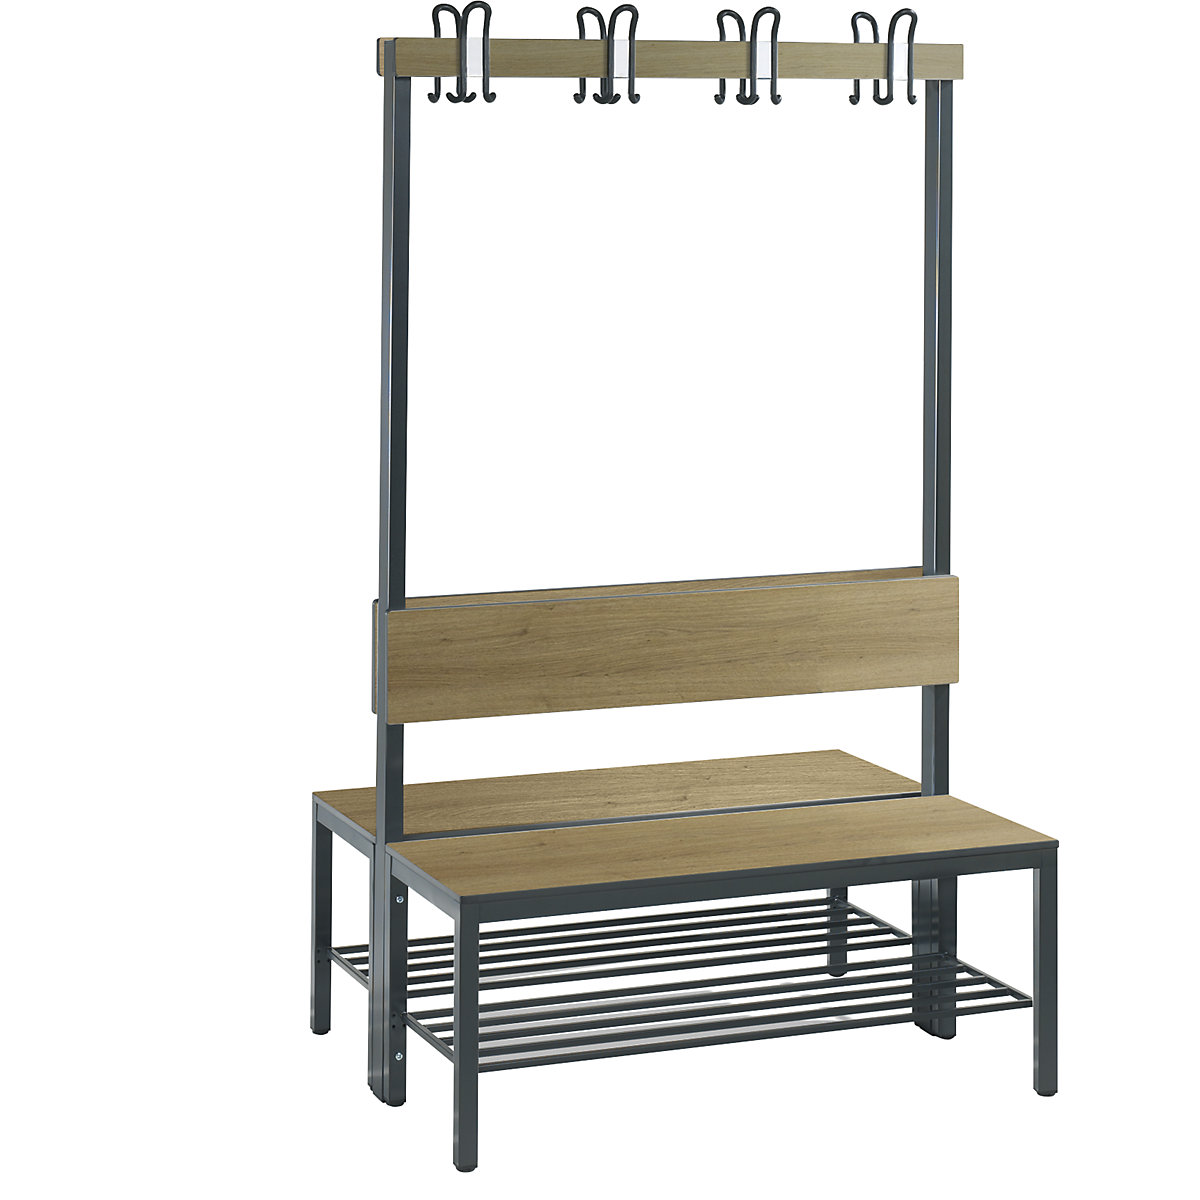 BASIC PLUS cloakroom bench, double sided – C+P, seat HPL, hook rail, shoe rack, length 1000 mm, oak finish-9